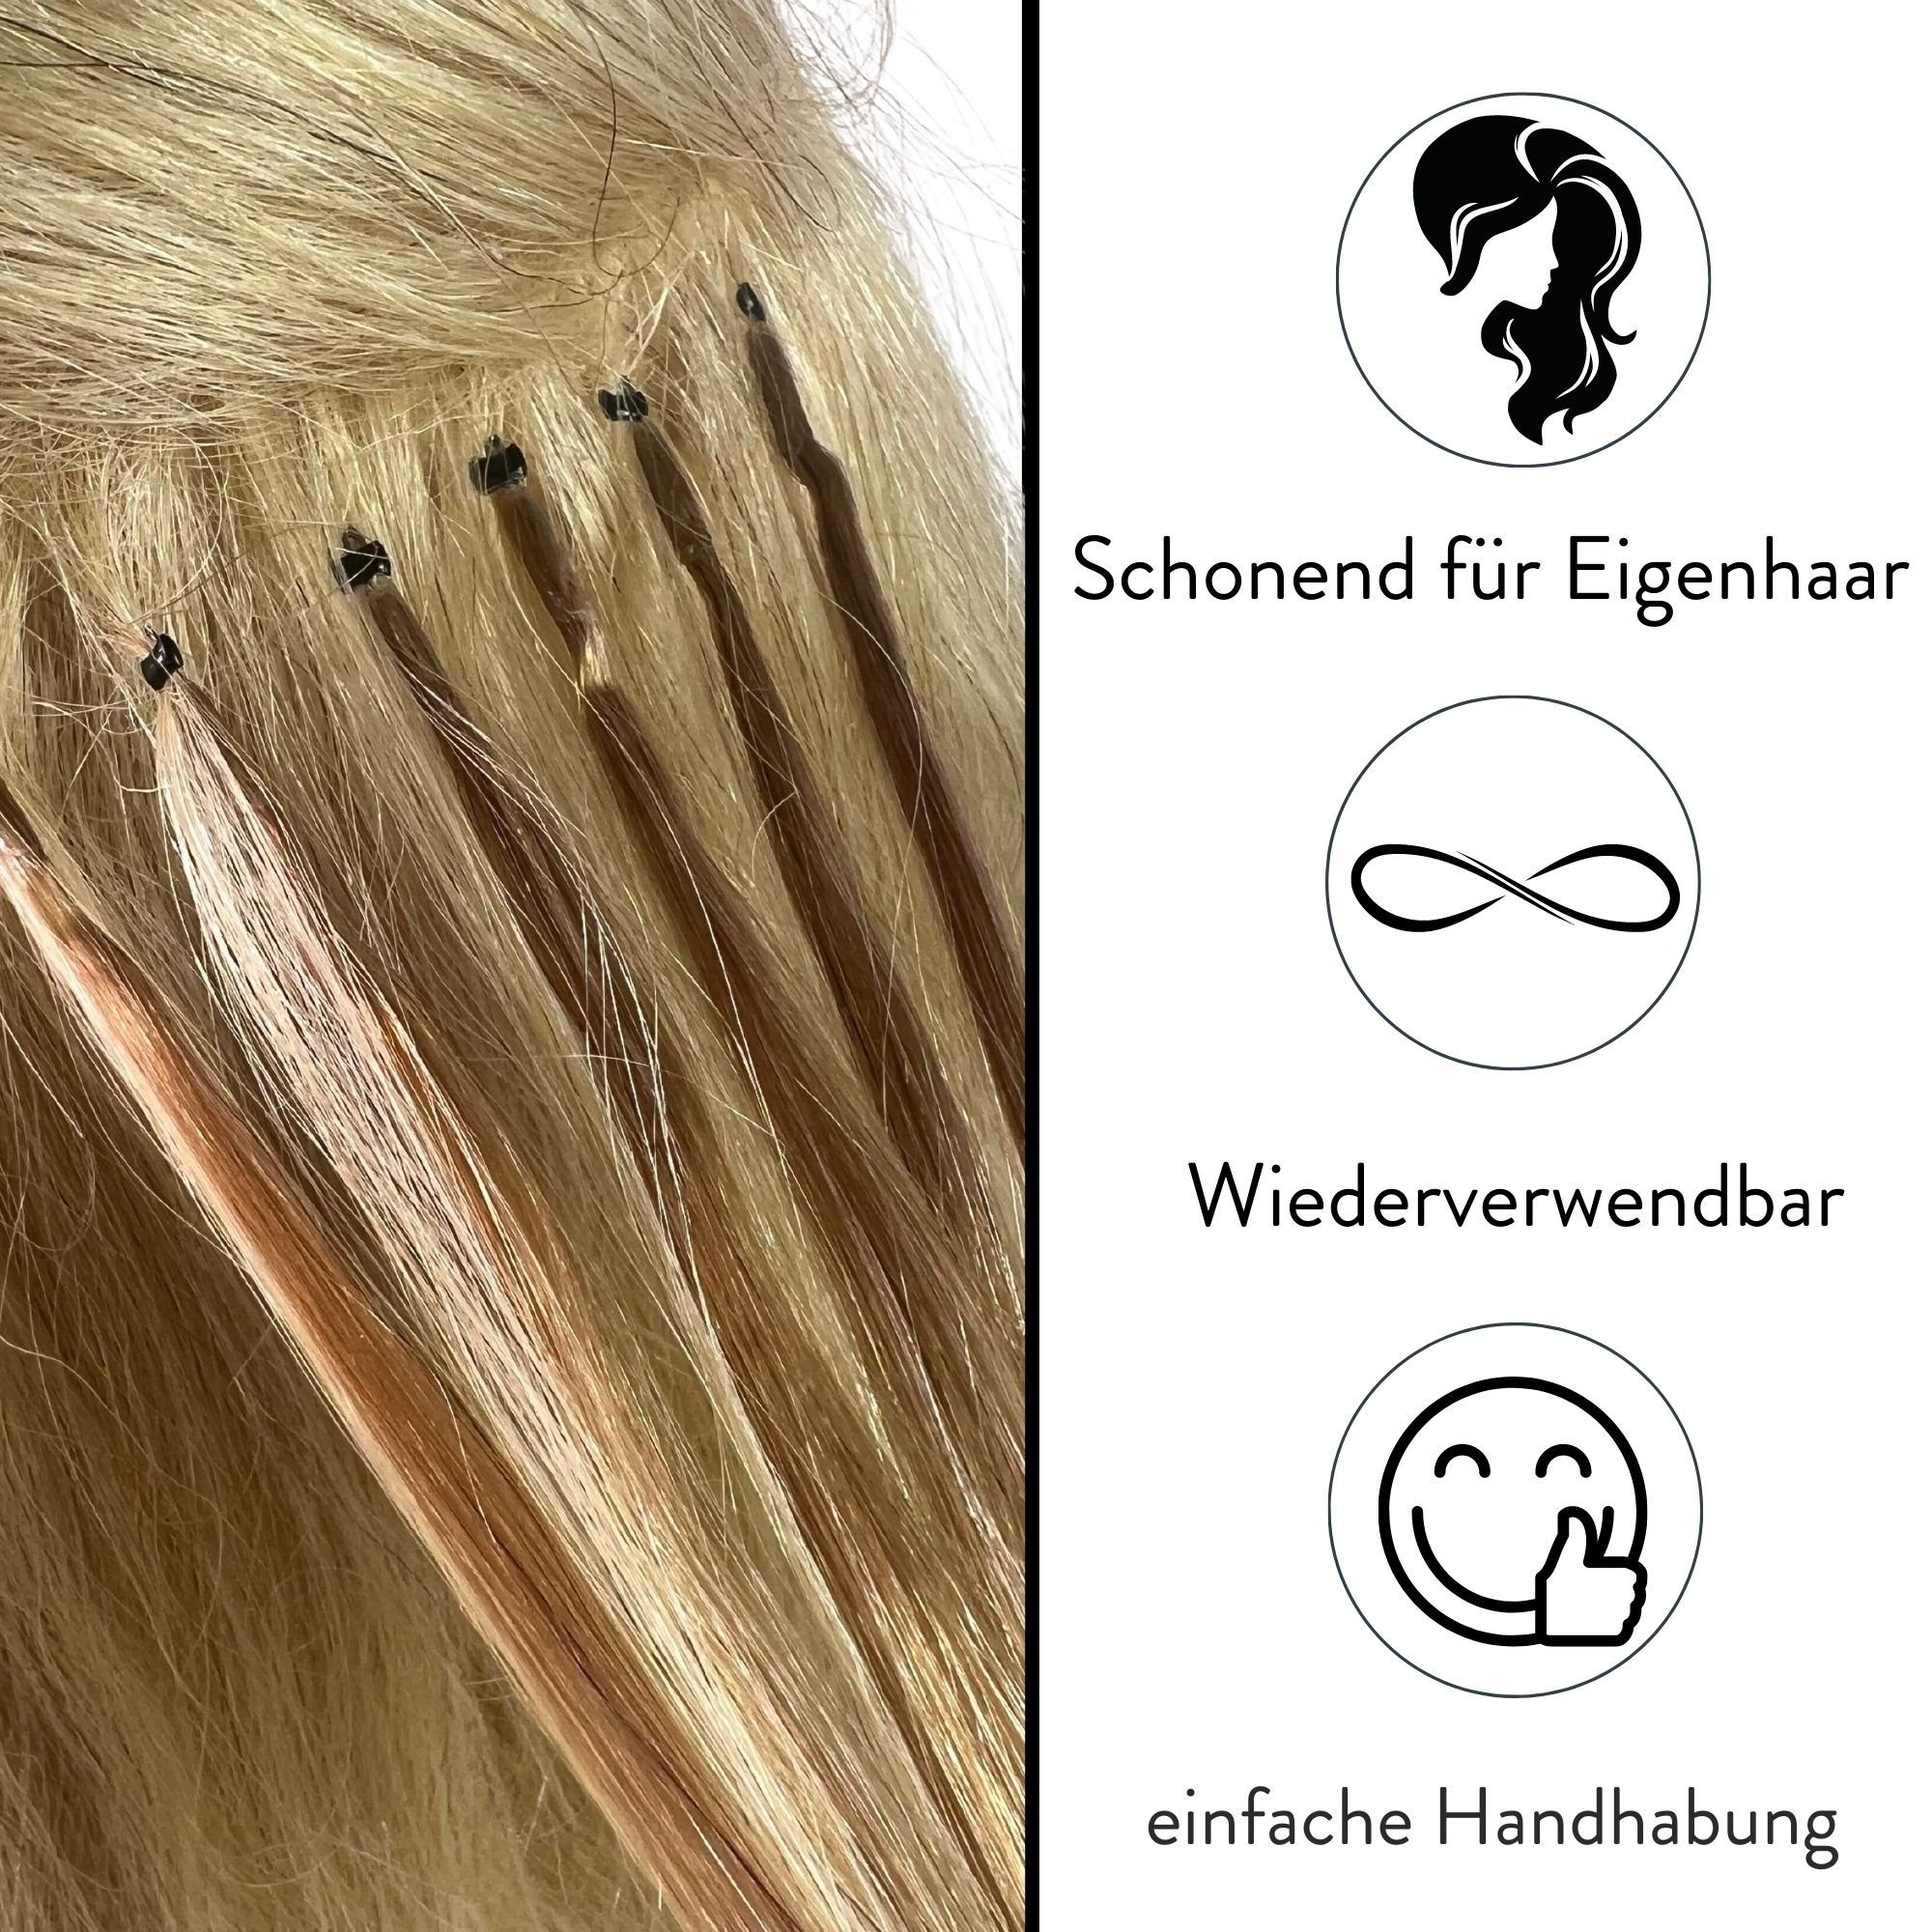 Nanorings Silikoneinlage Echthaar-Extension #6 mit hair2heart